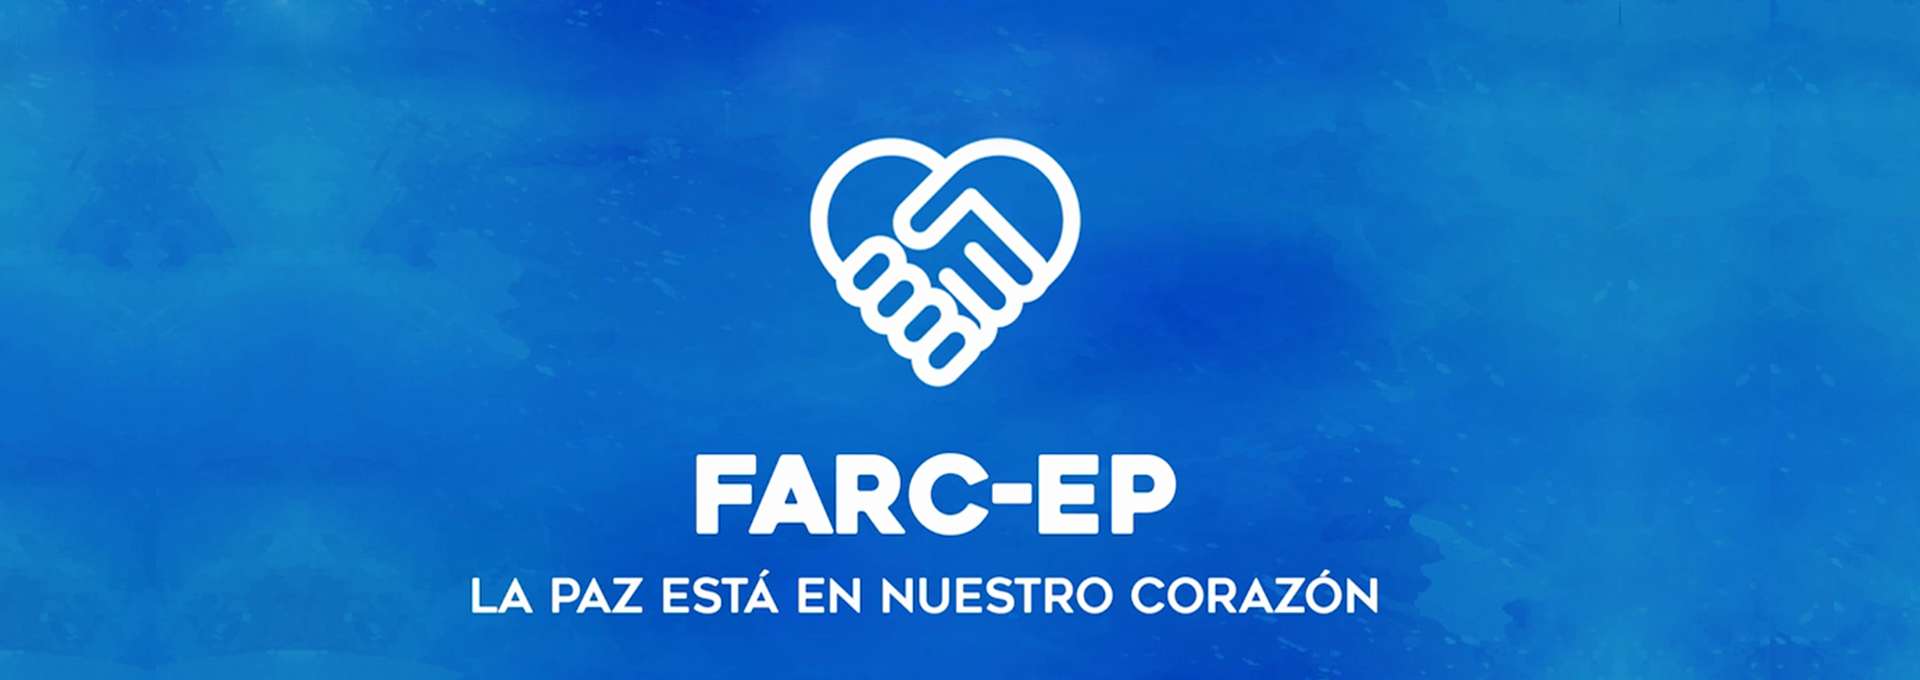 FARC EP Portada paz